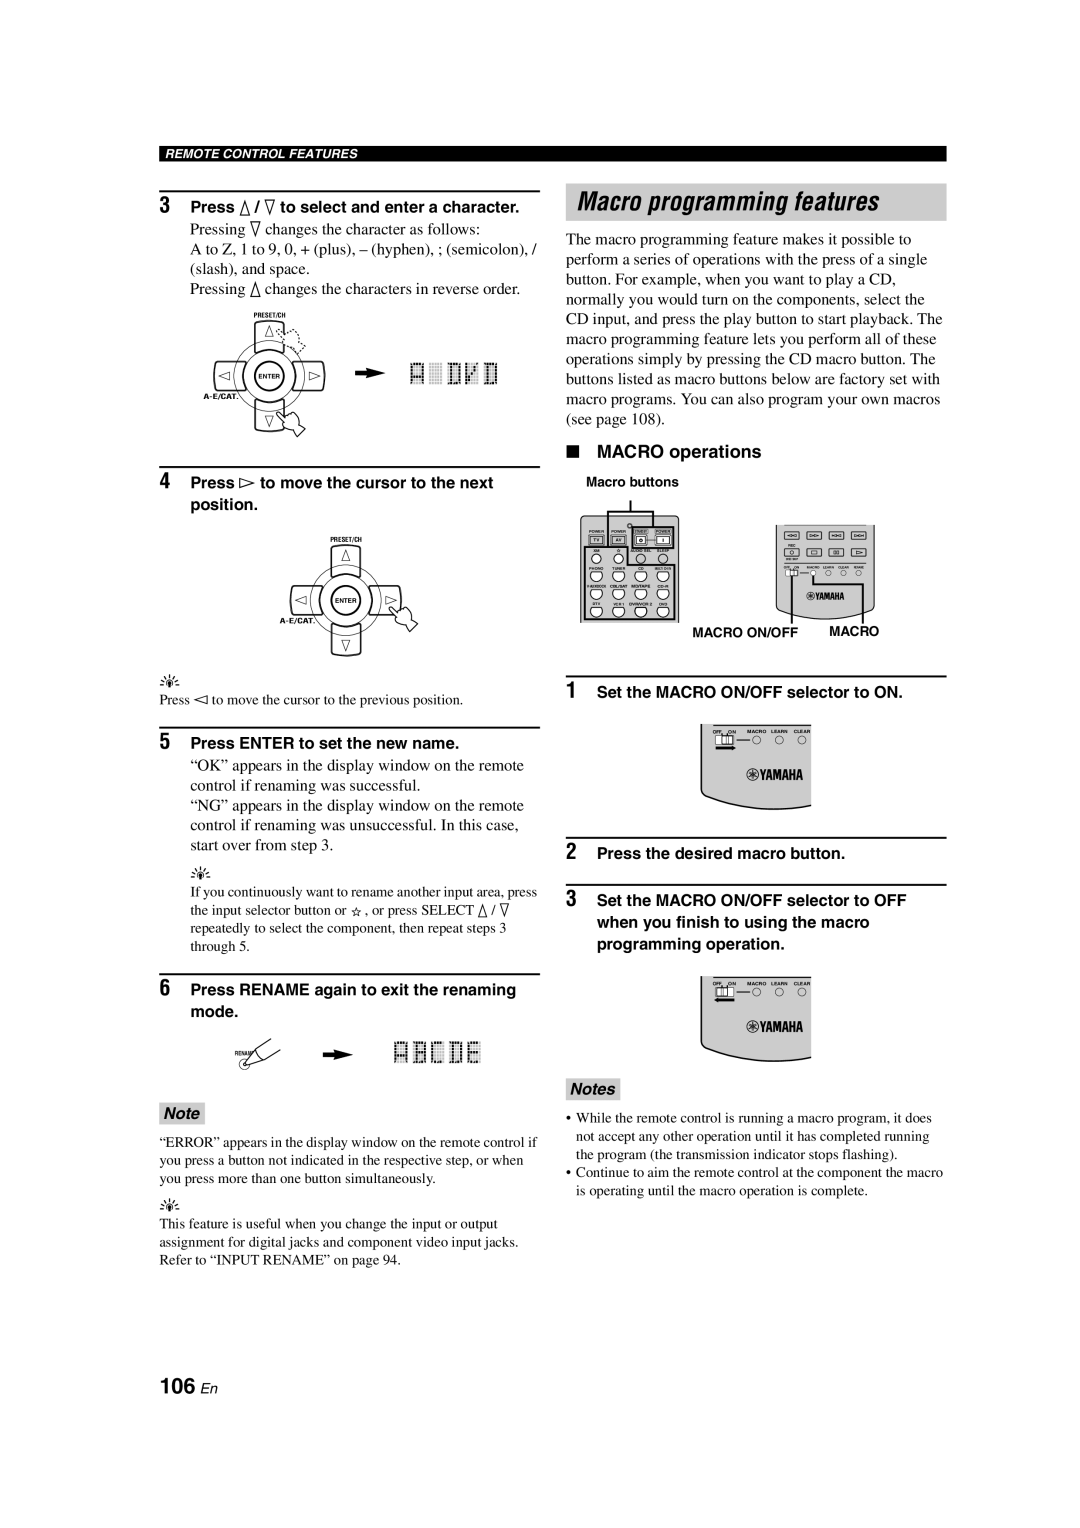 Yamaha HTR-6090 owner manual Macro programming features, 106 En, MACRO operations, Notes 